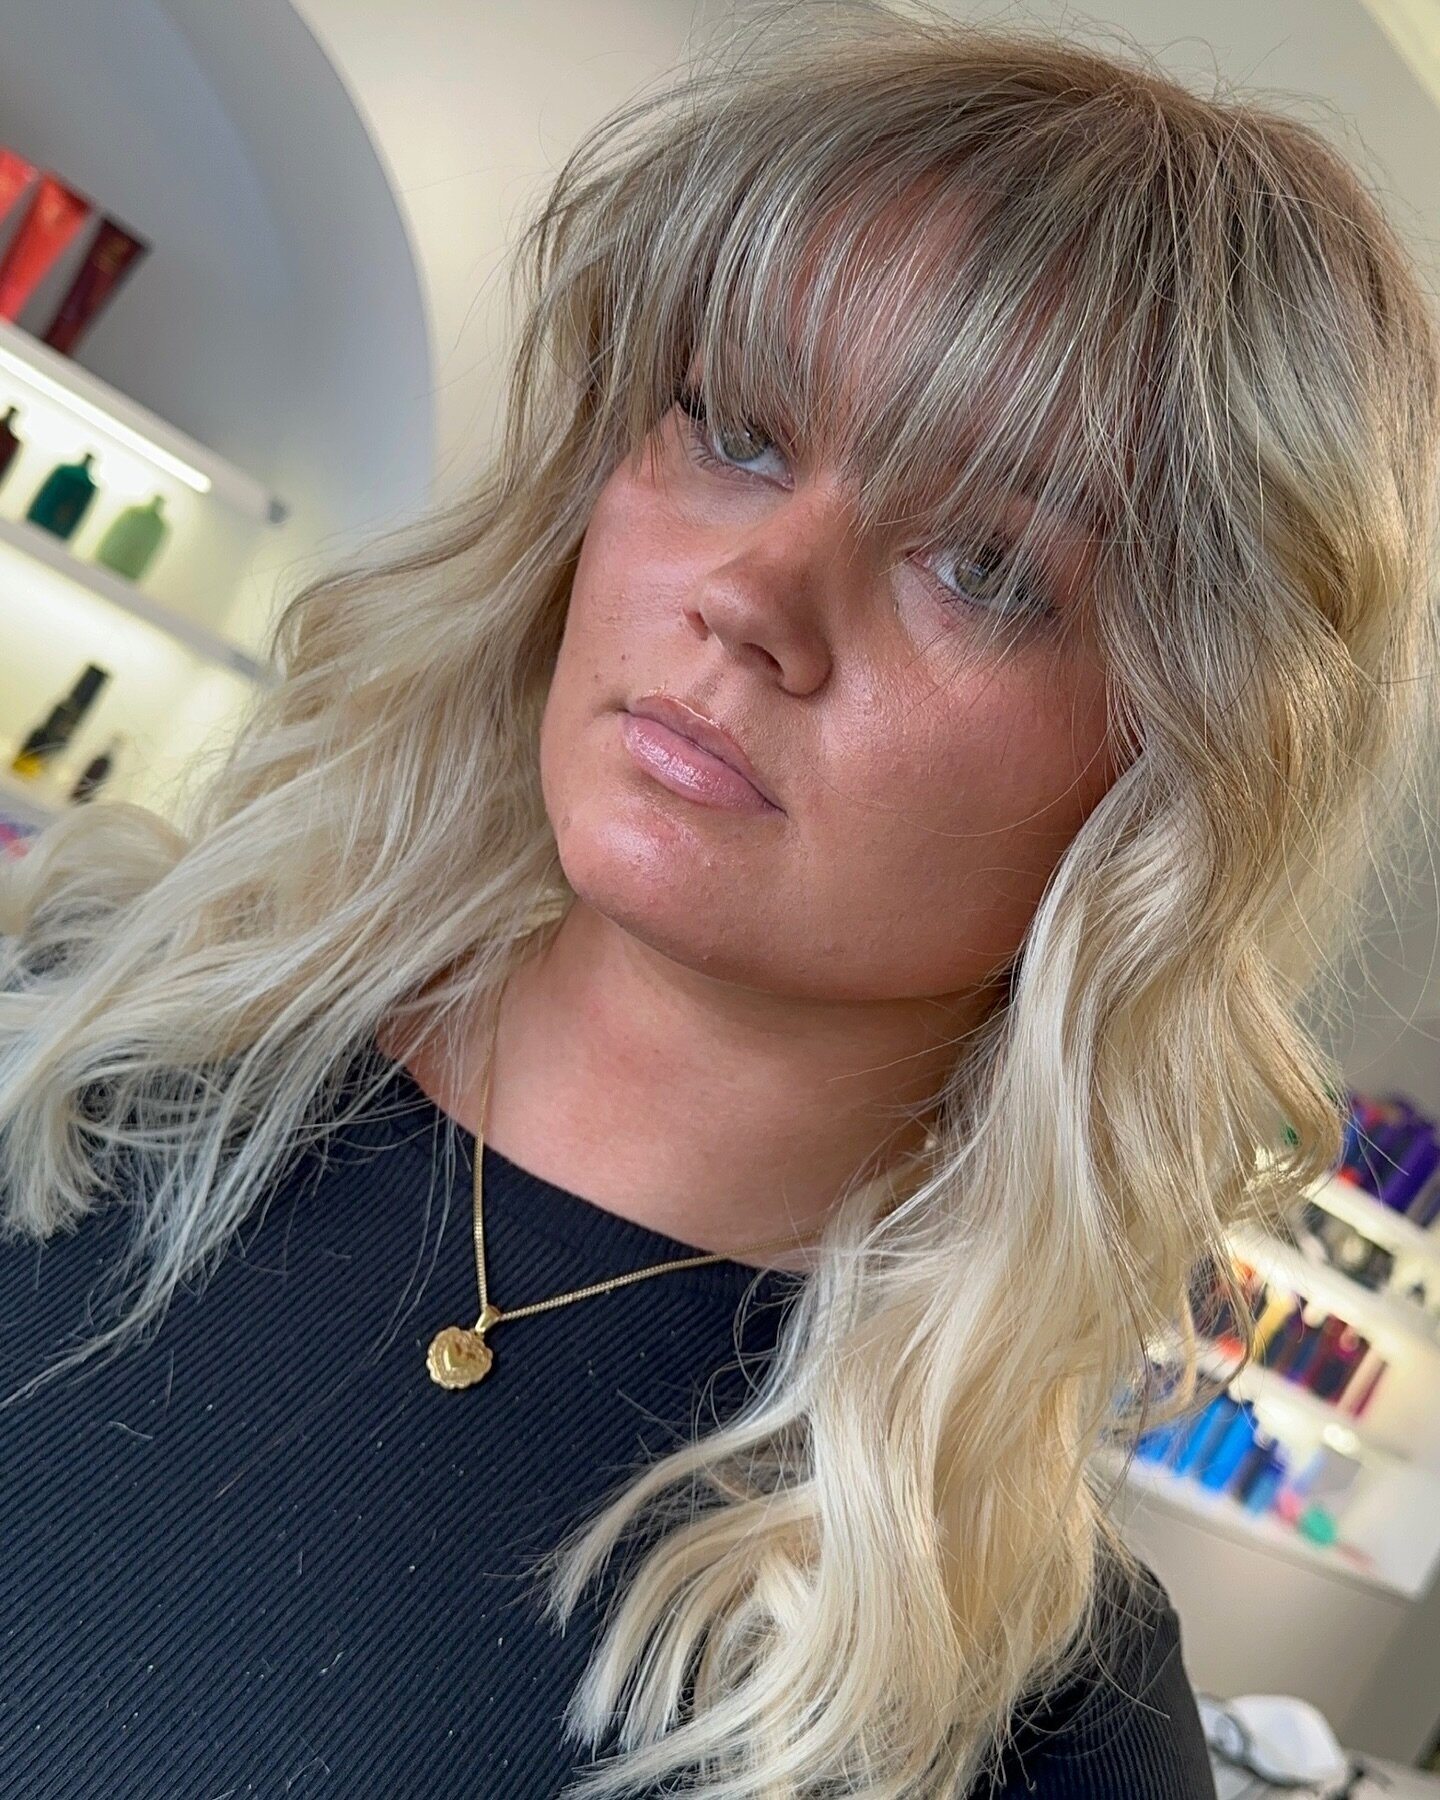 Gorgeous blonde by Toni 

#blonde #blondesalon #melbournesalon #transformation #blondespecialist #dyson #ghd @labiosthetiqueaus @randcobleu co @oribe @framar